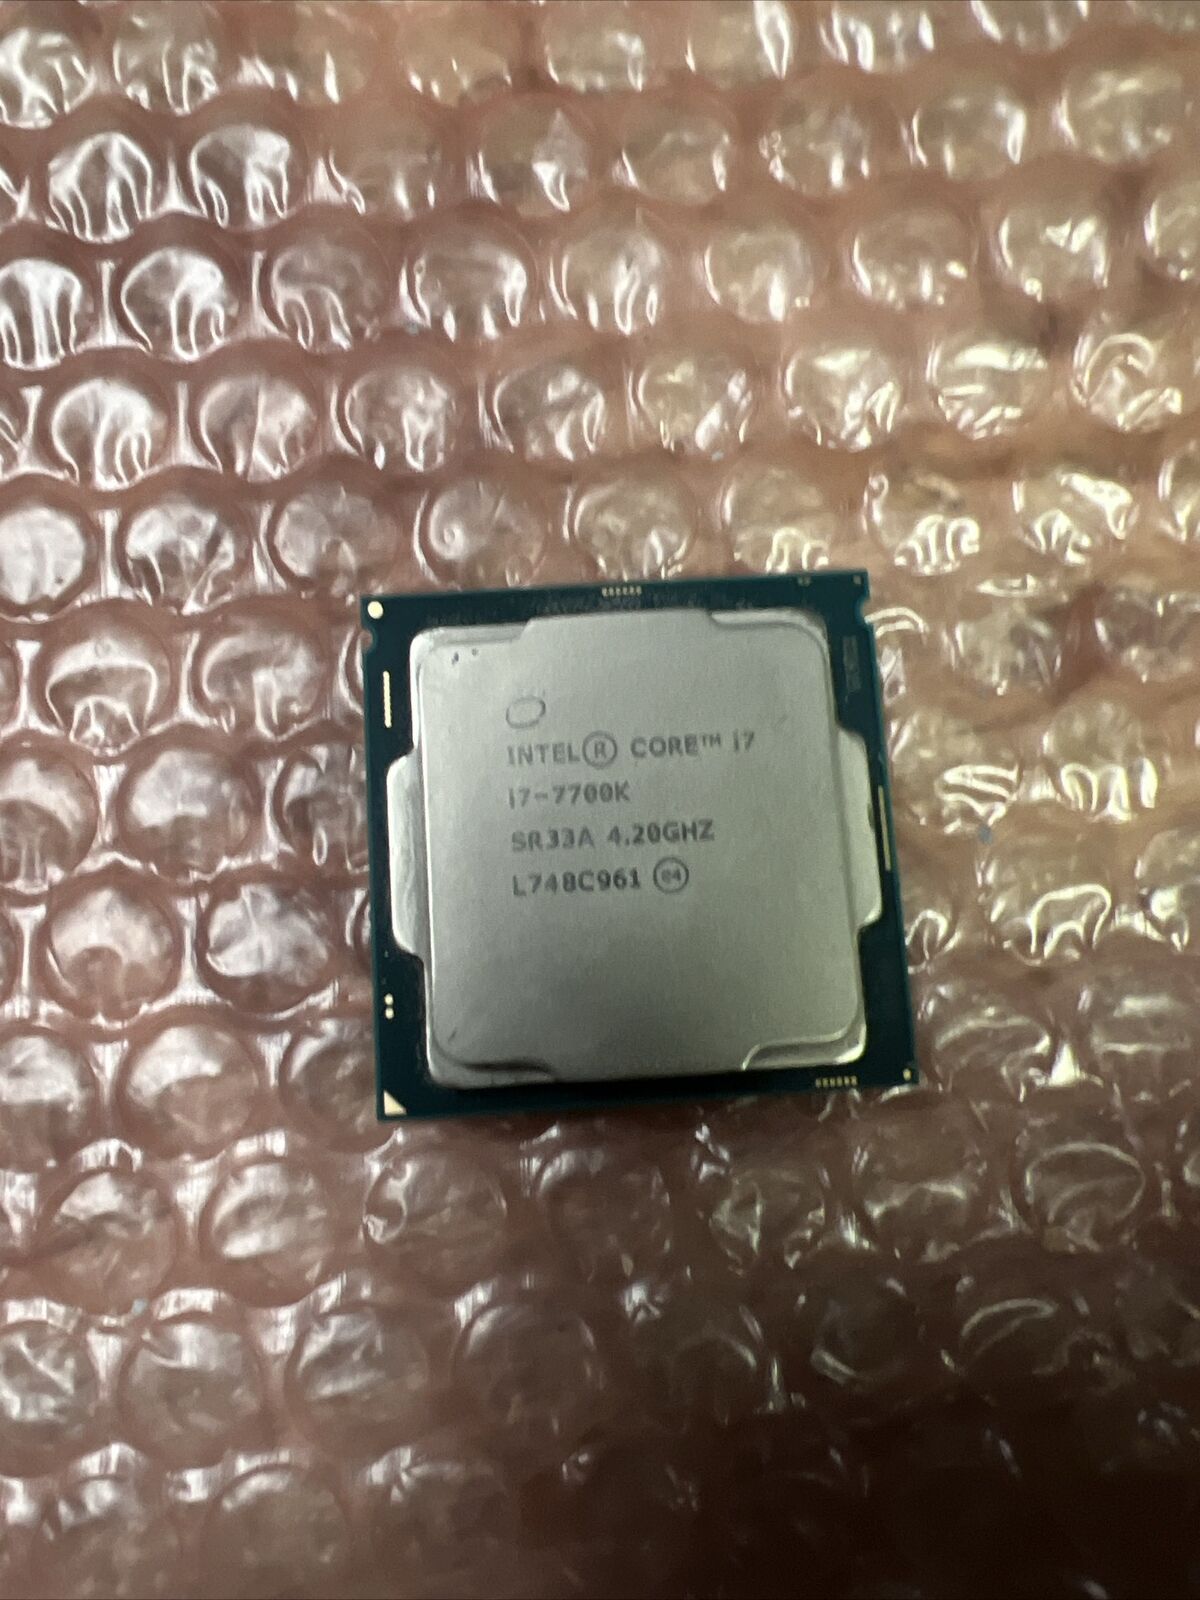 INTEL CORE i7-7700K 4.20GHz CPU QUAD CORE Processor SR33A